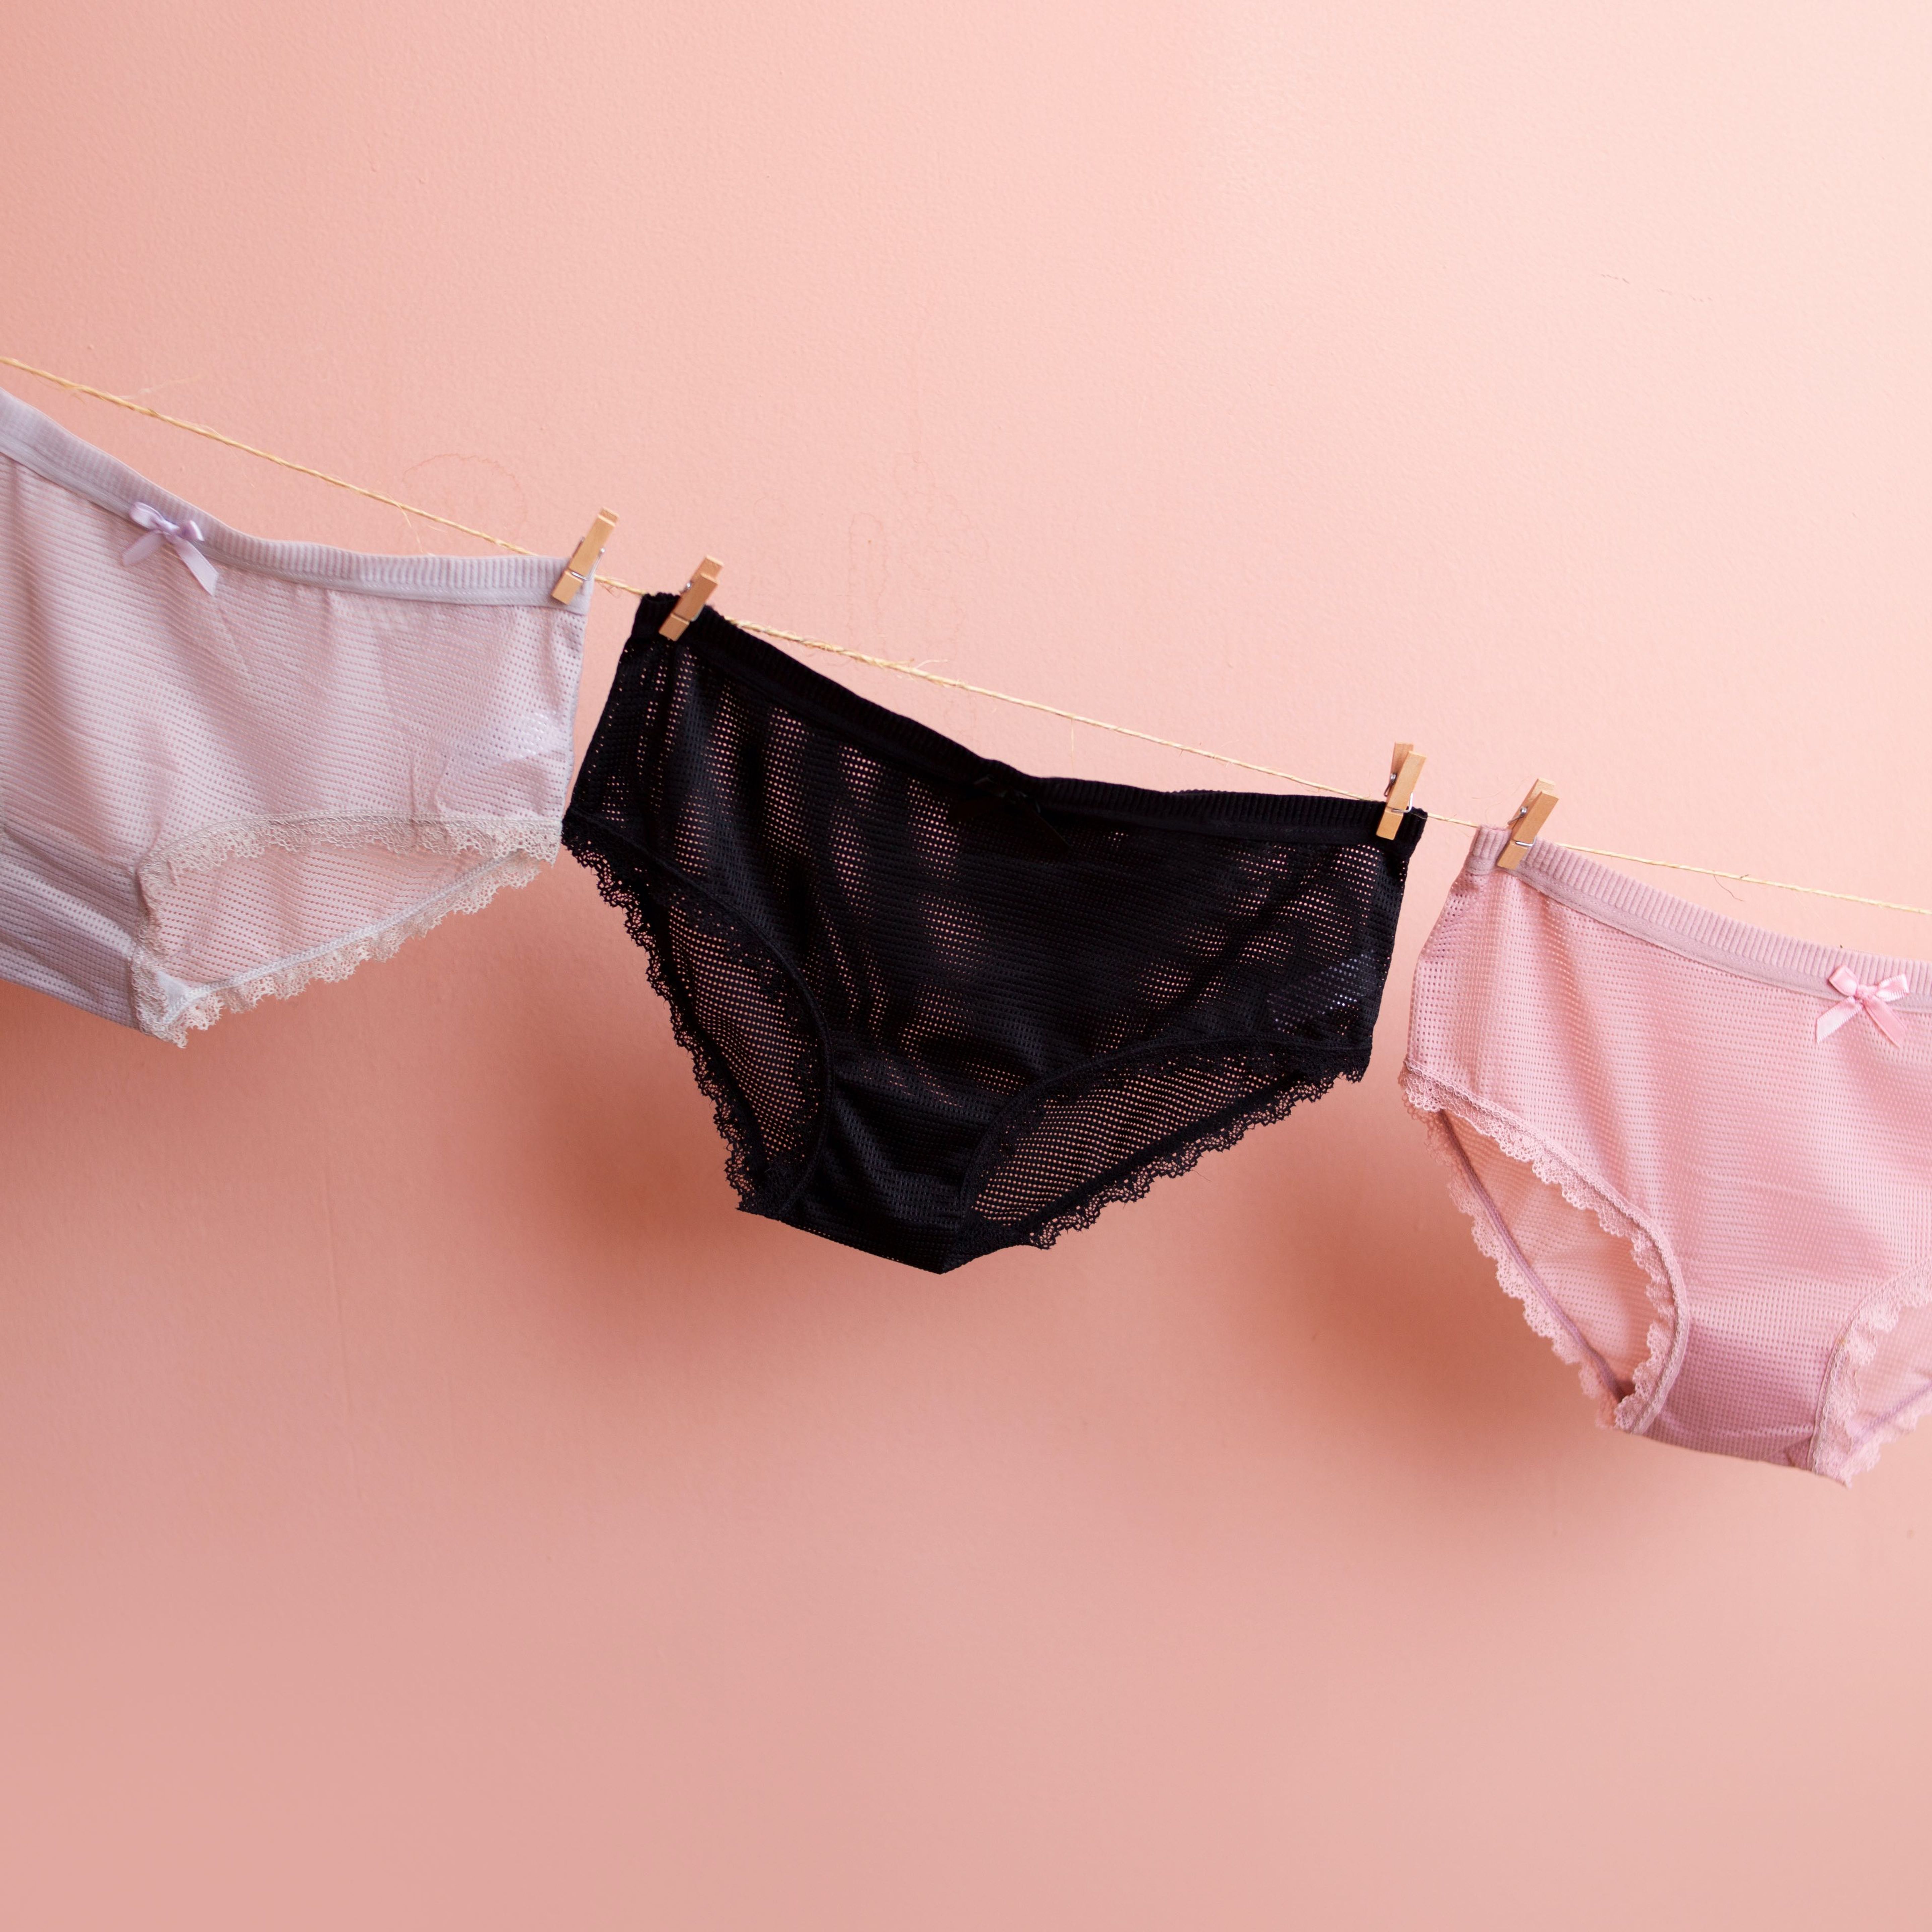 Laver sa culotte menstruelle : lave-linge ou à la main ? – Nana